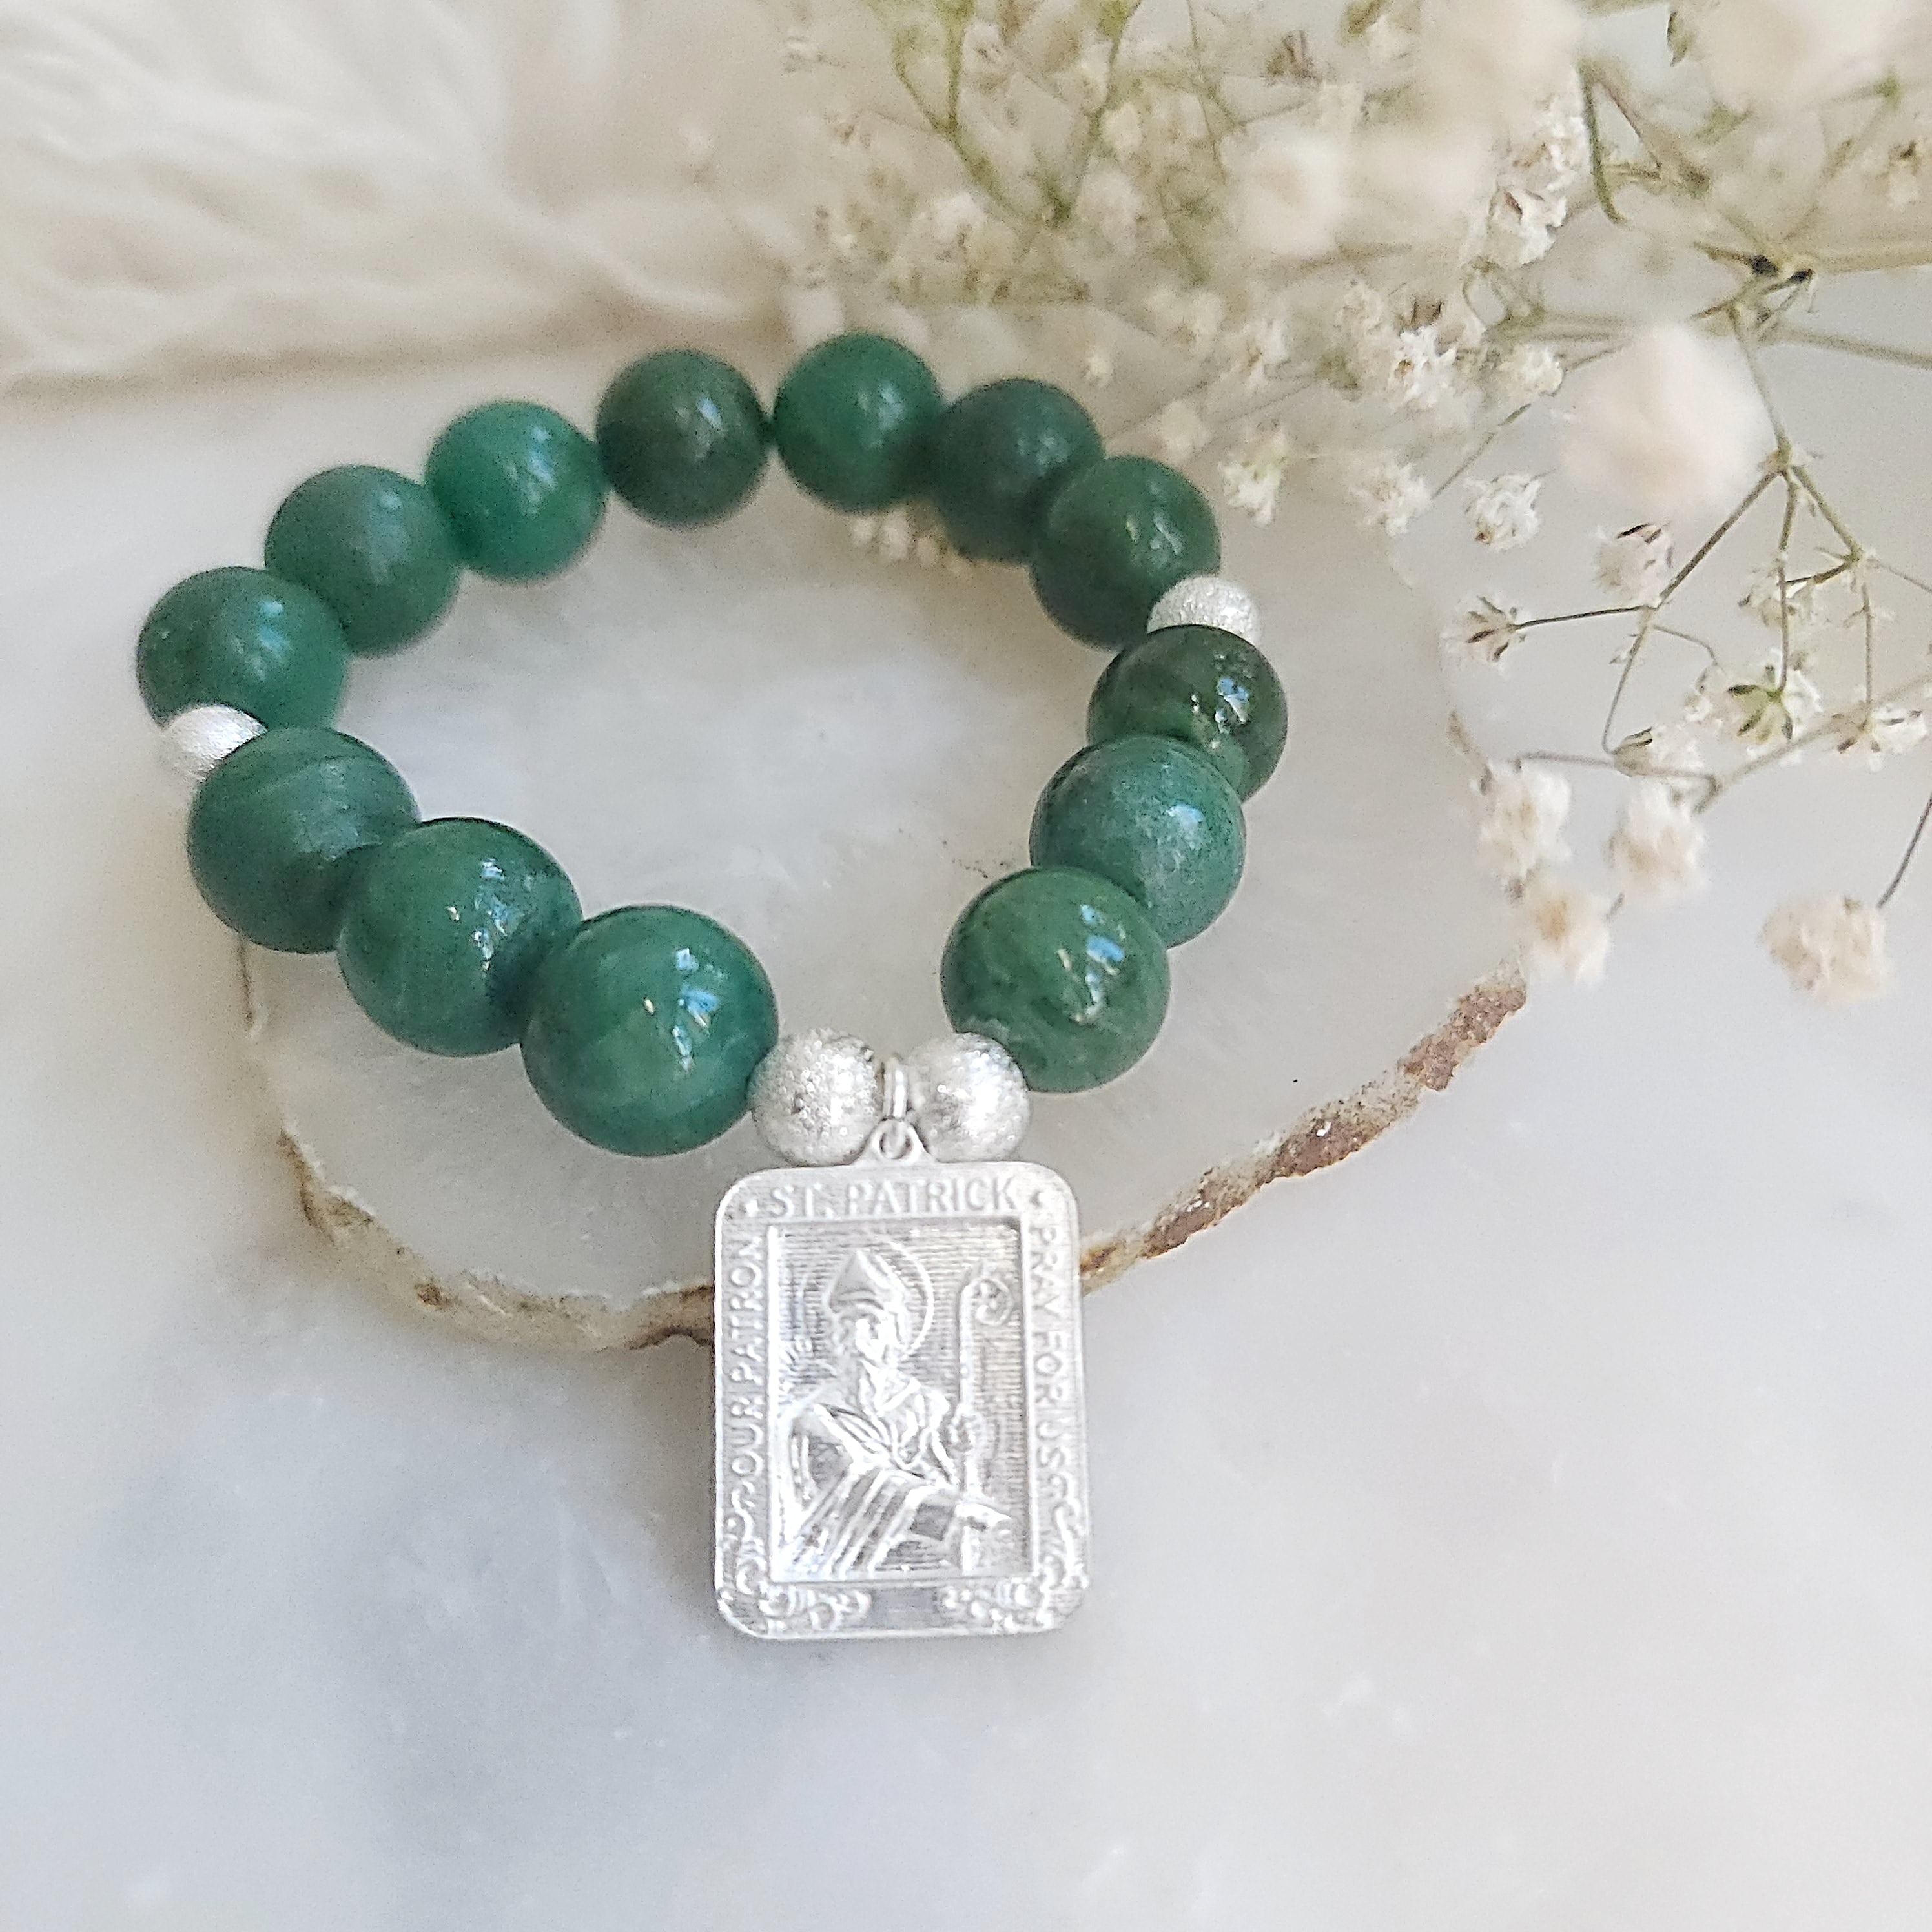 St. Patrick of Ireland Jade 12mm bracelet